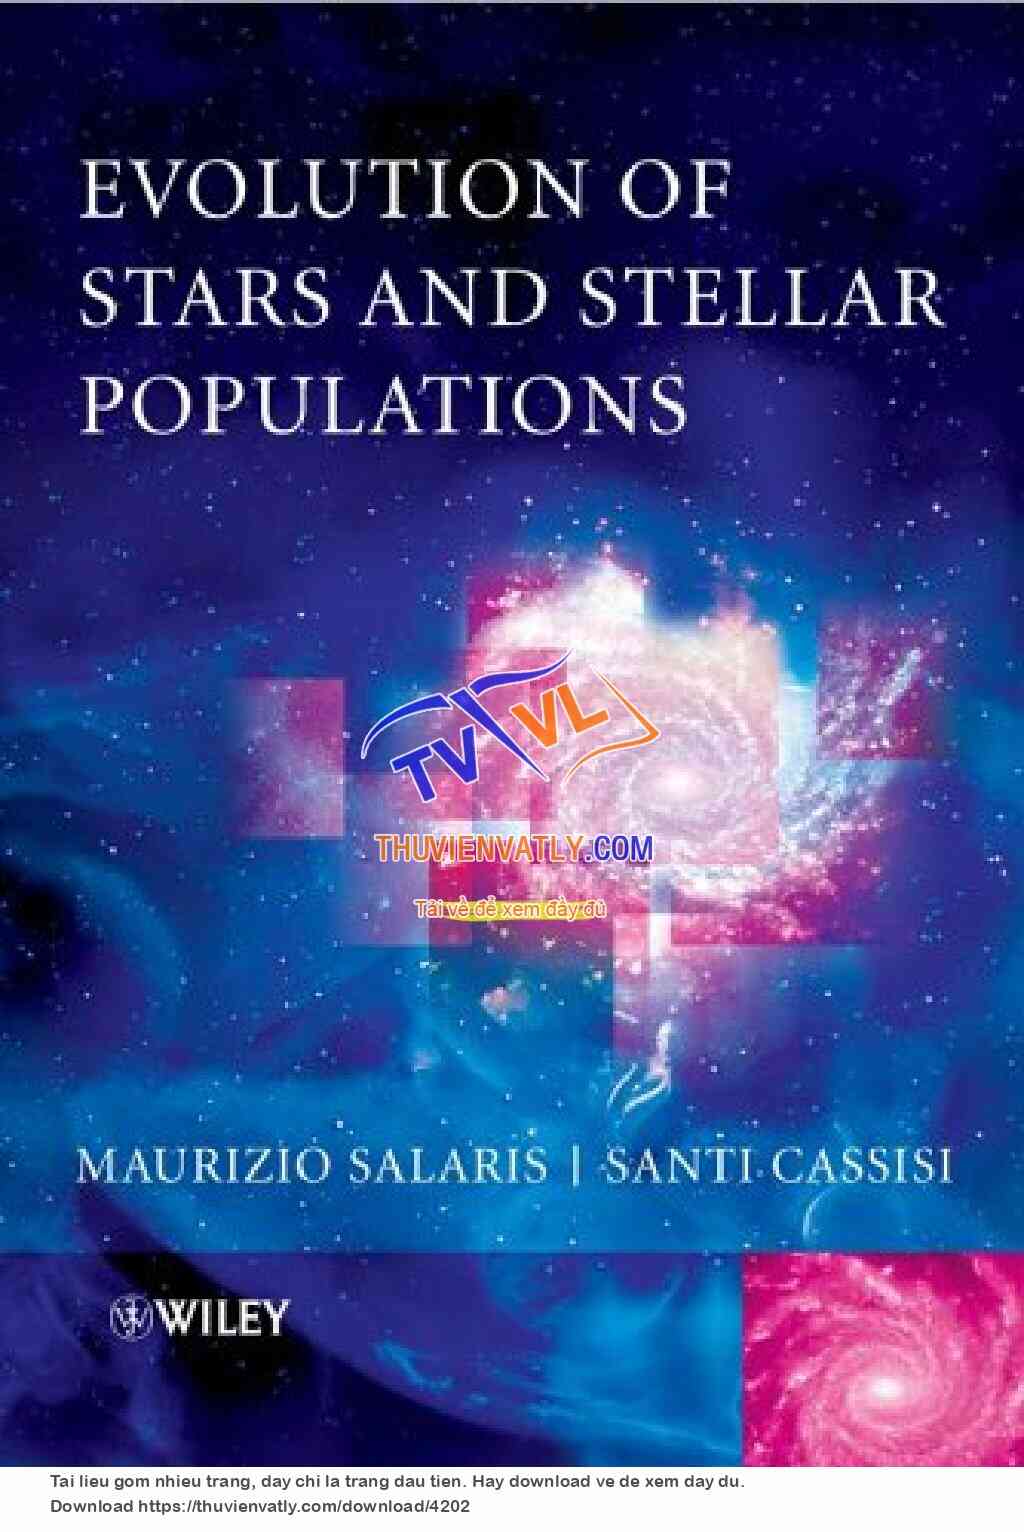 Evolution of stars and stellar populations